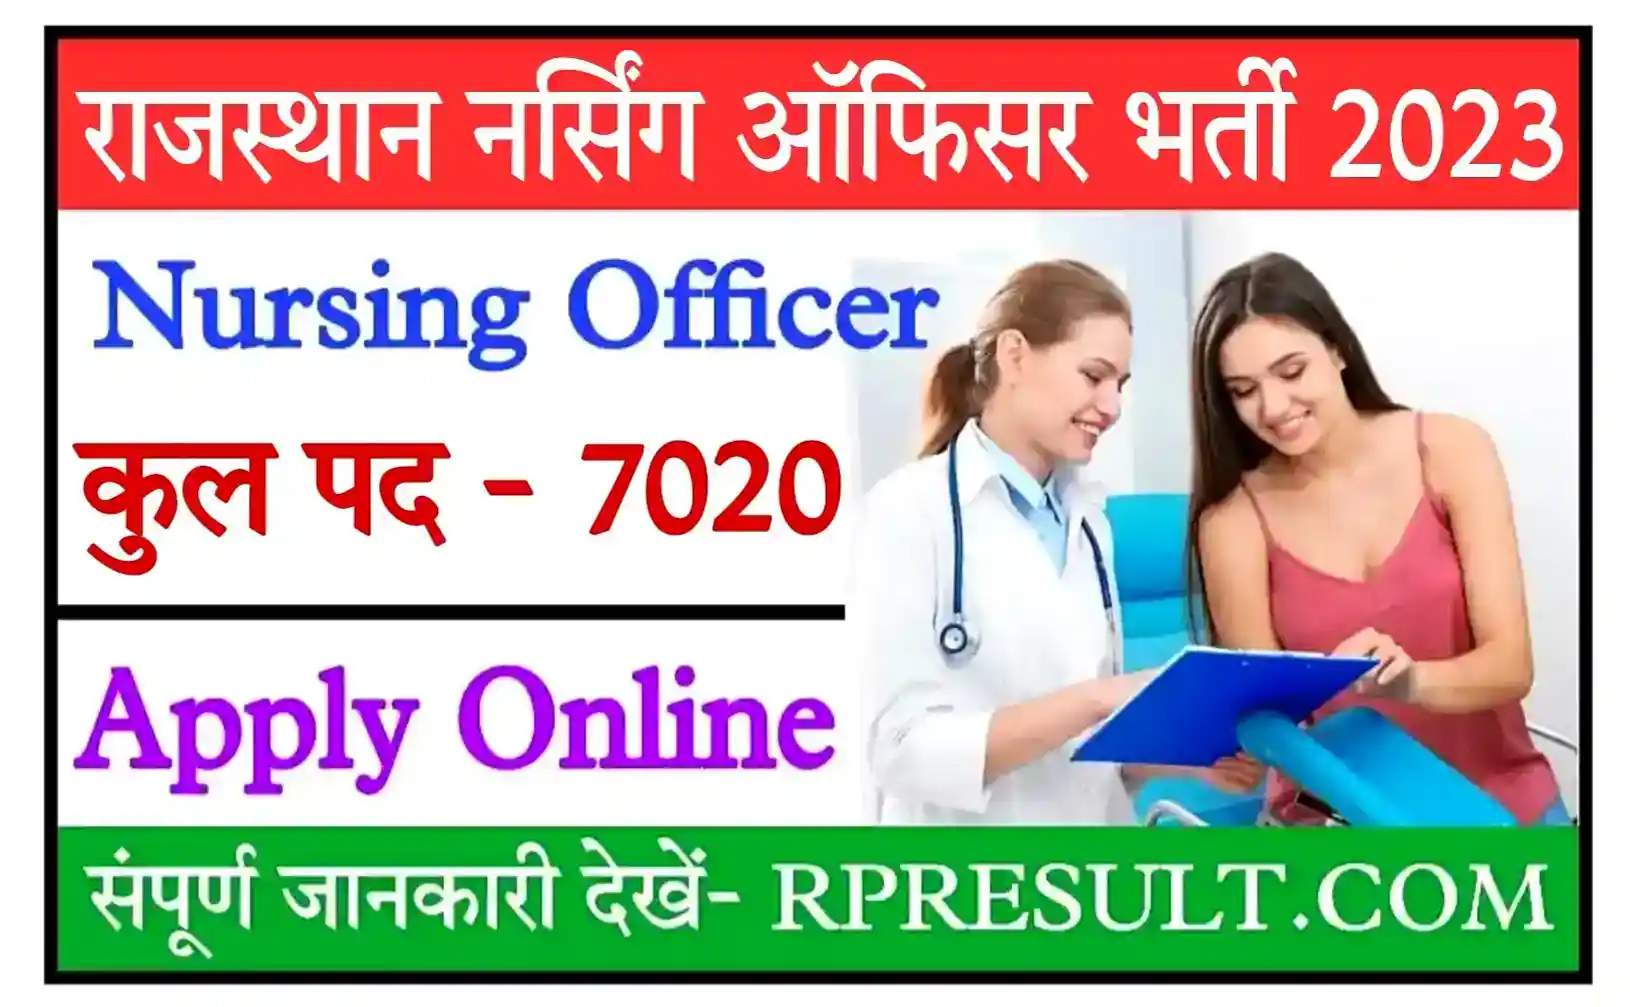 Rajasthan Nursing Officer Recruitment 2023 Apply Link For 7020 Posts Check All Details